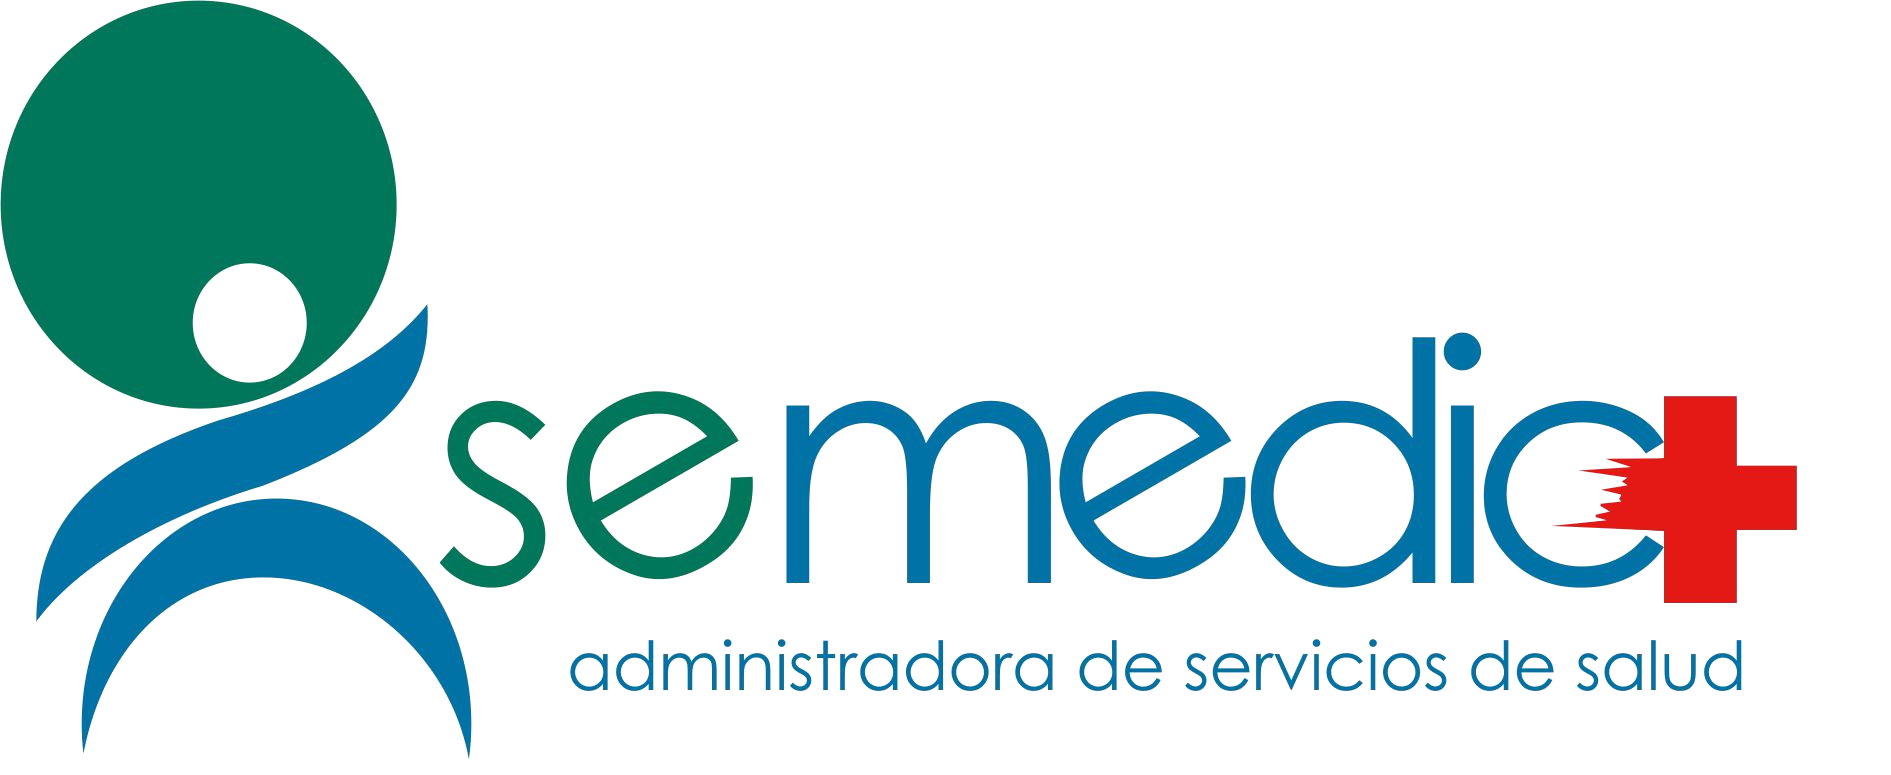 Logo Semedic